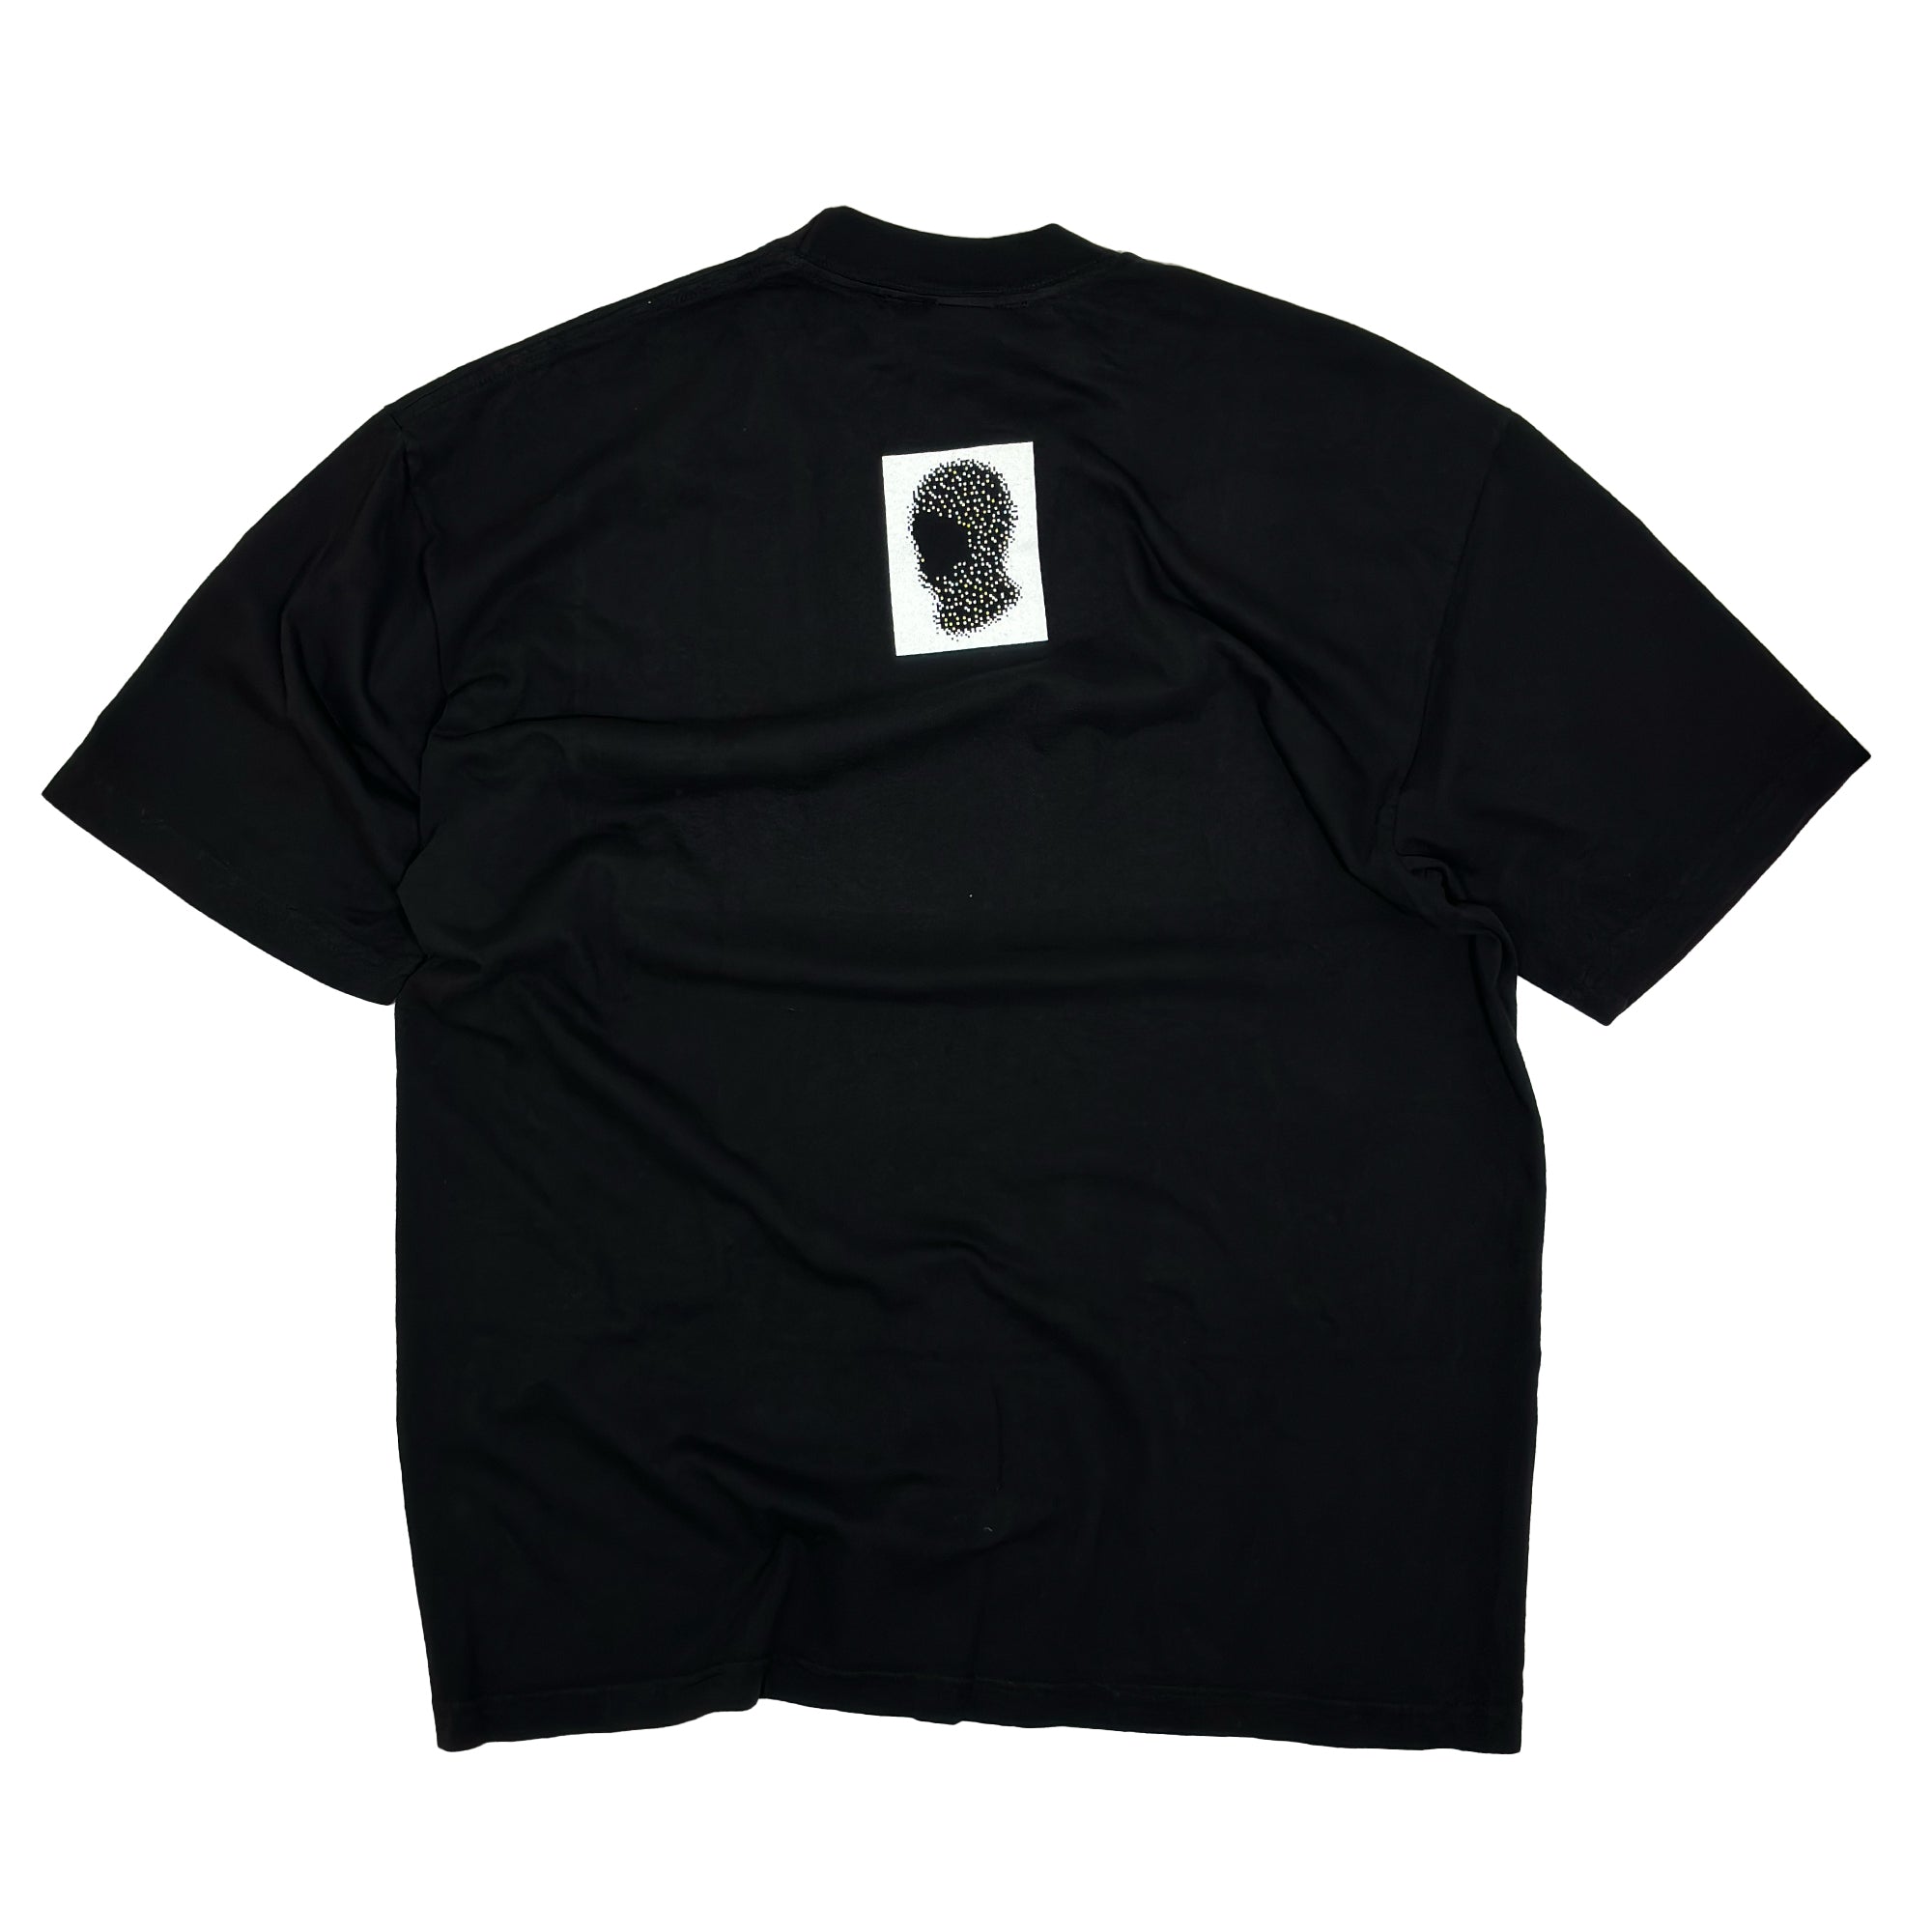 Ramps Flipper Short Sleeve T-Shirt Black